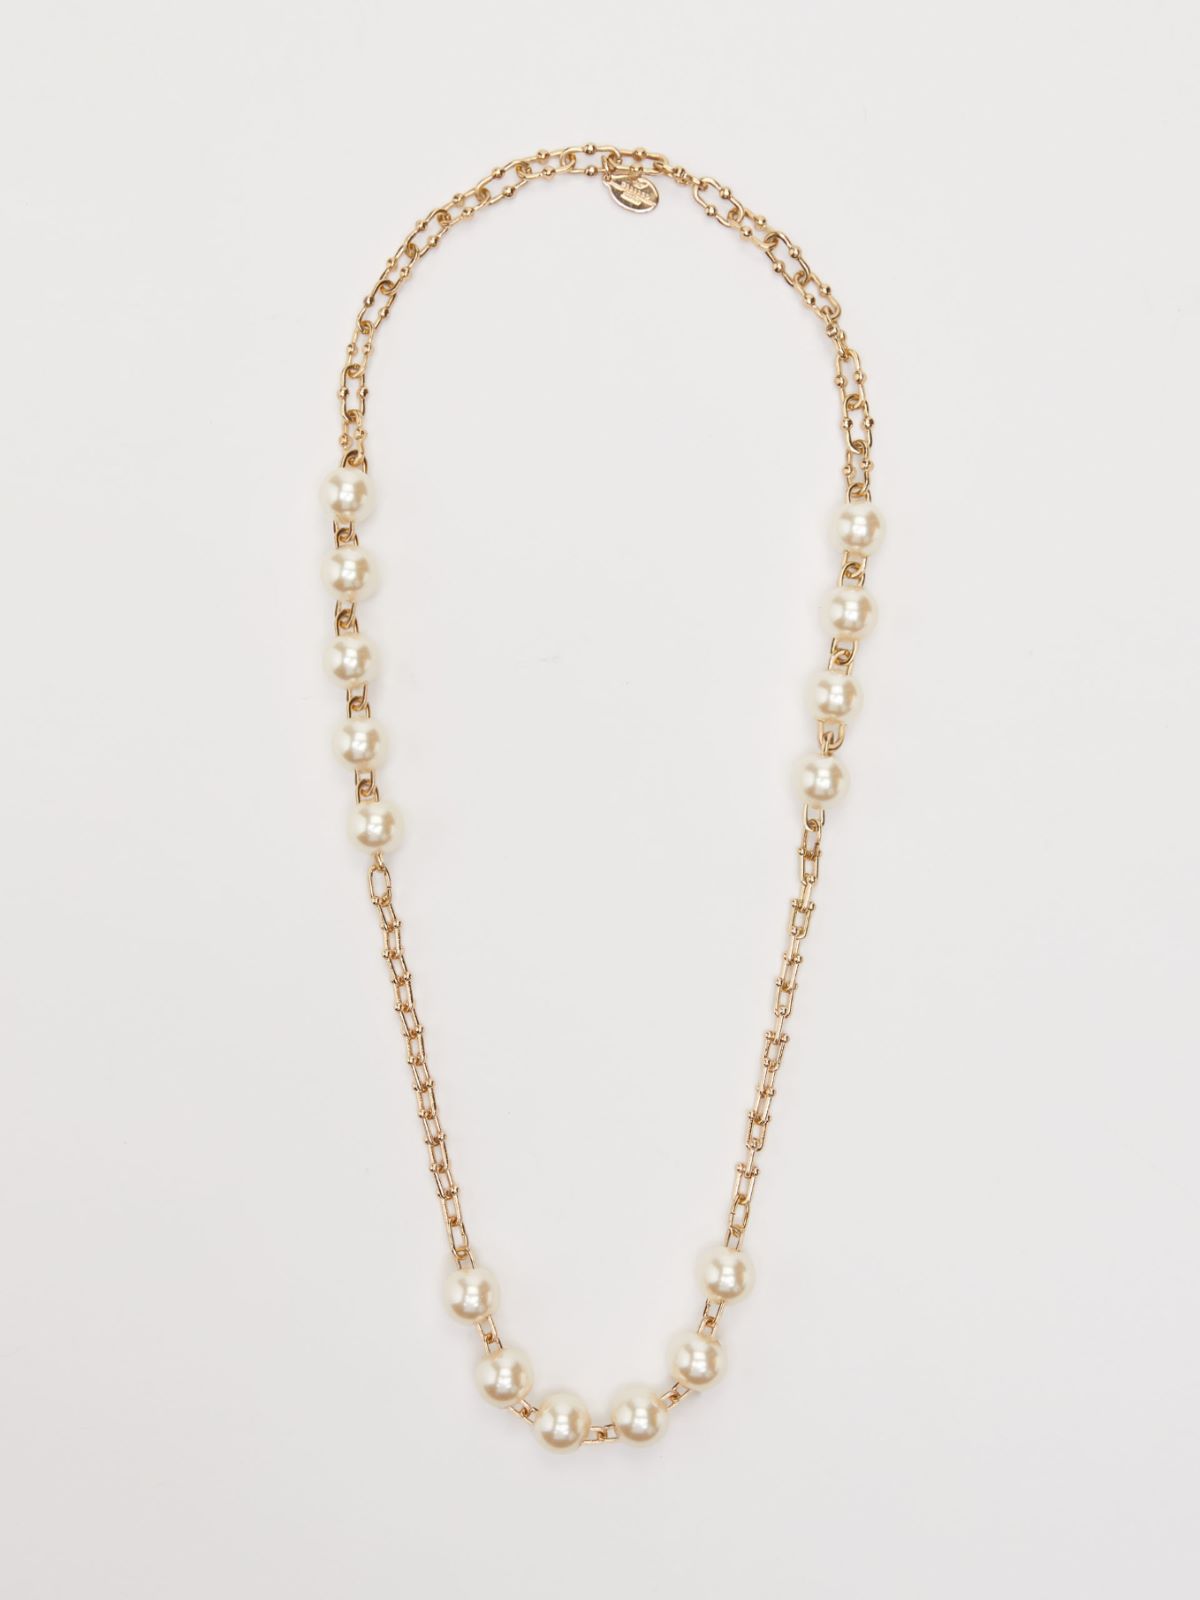 Rhinestone-adorned necklace - GOLD - Weekend Max Mara